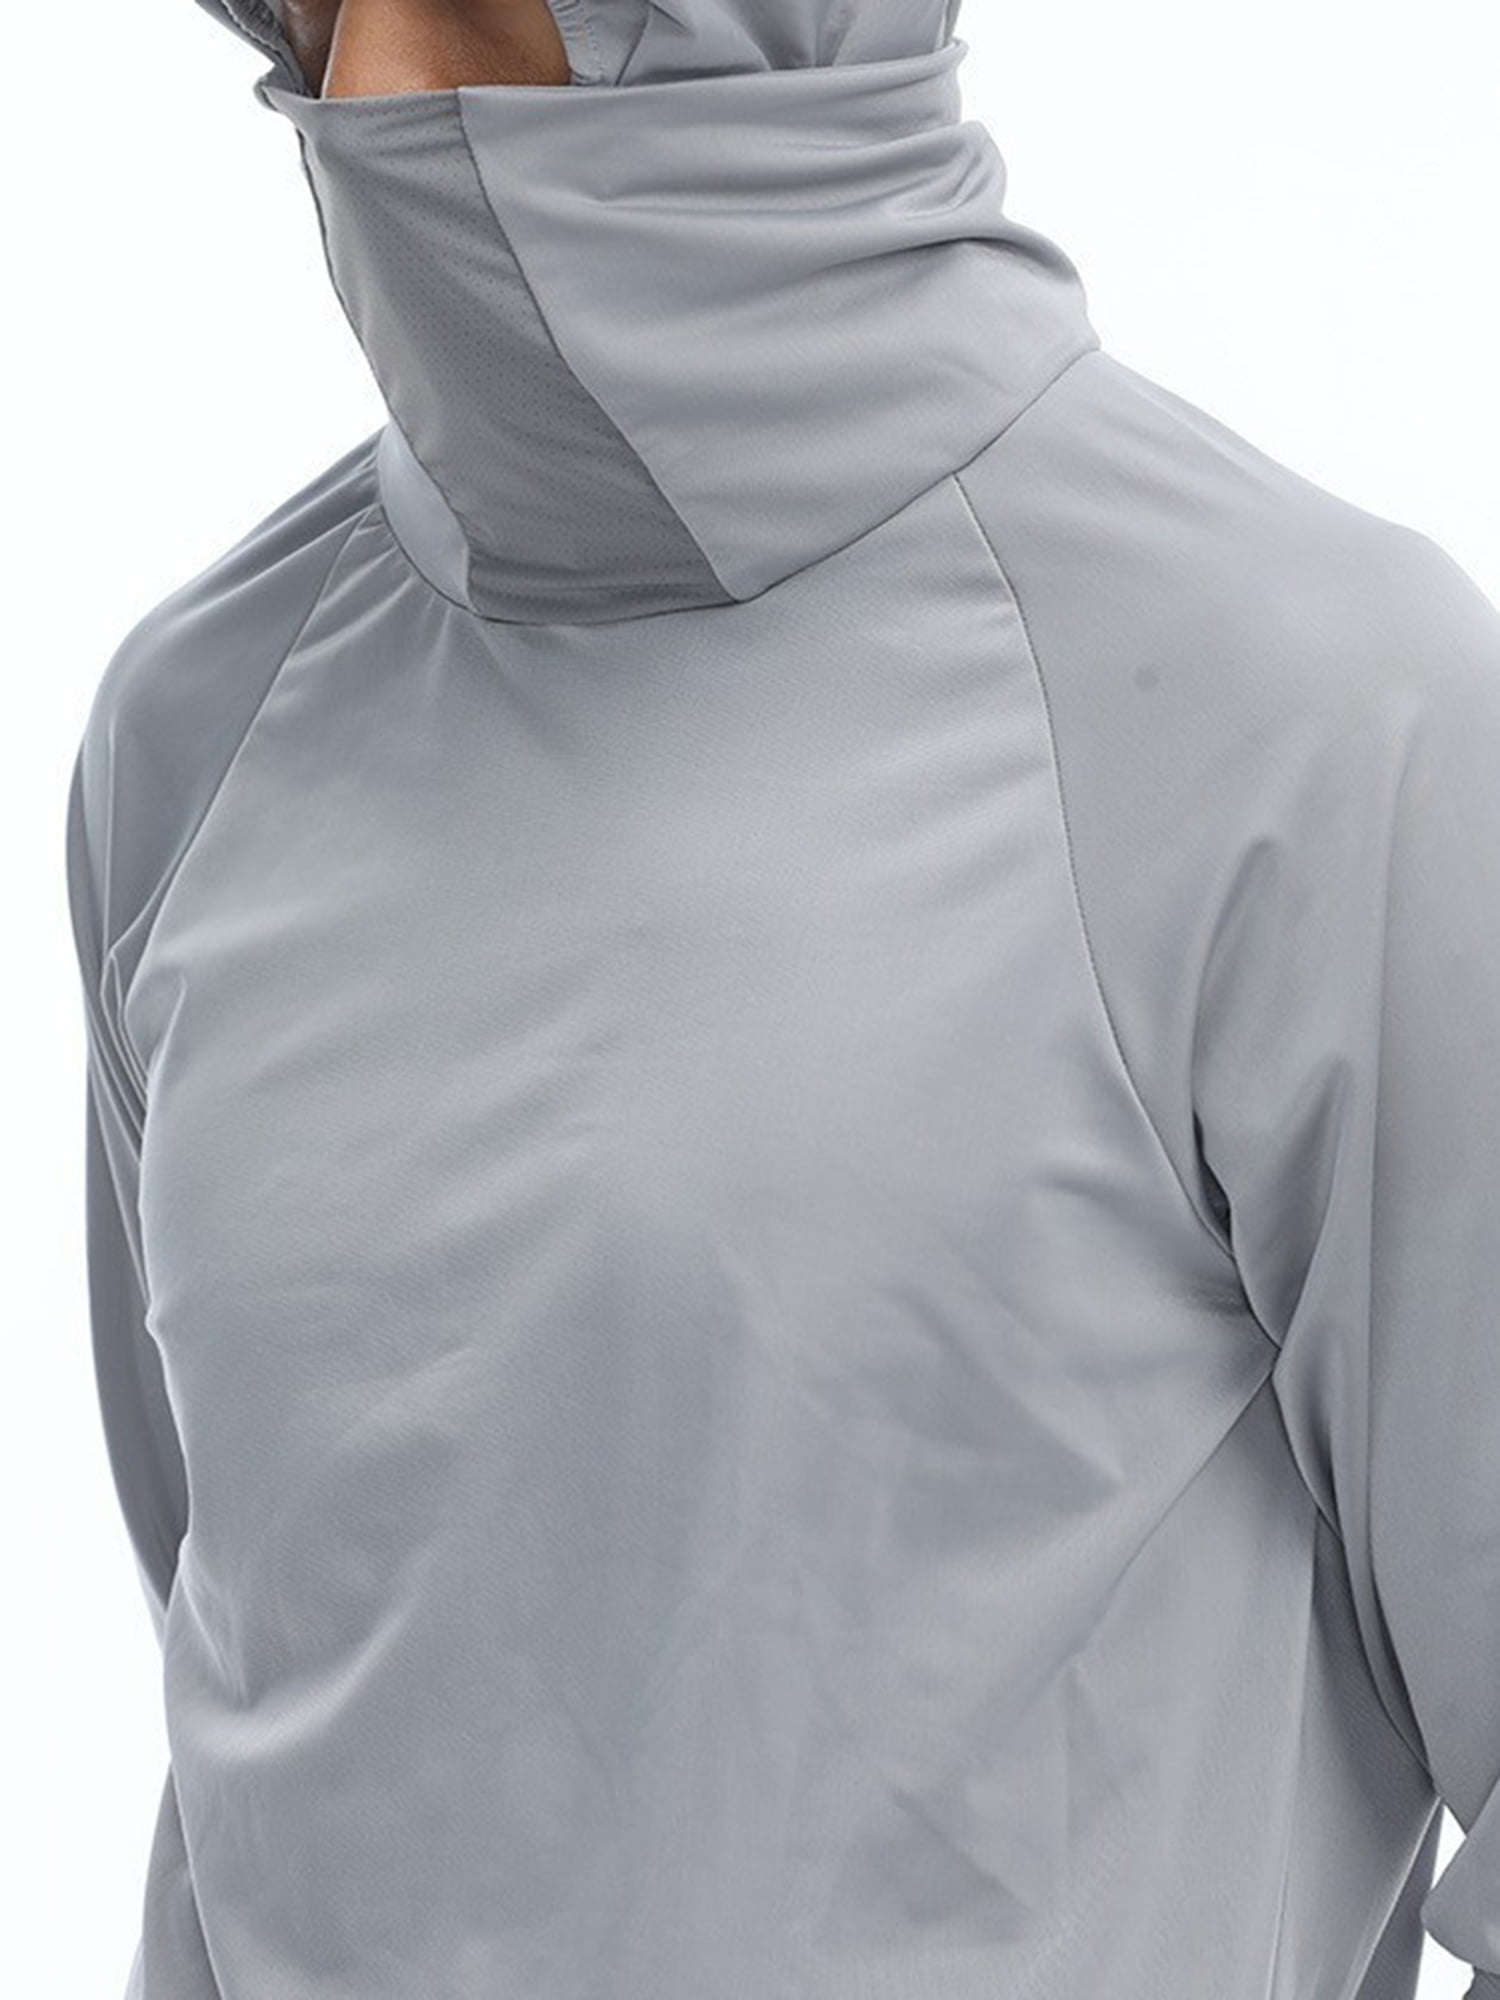 GXFC Men's Sun Protection Hoodie Shirts Long Sleeve Lightweight